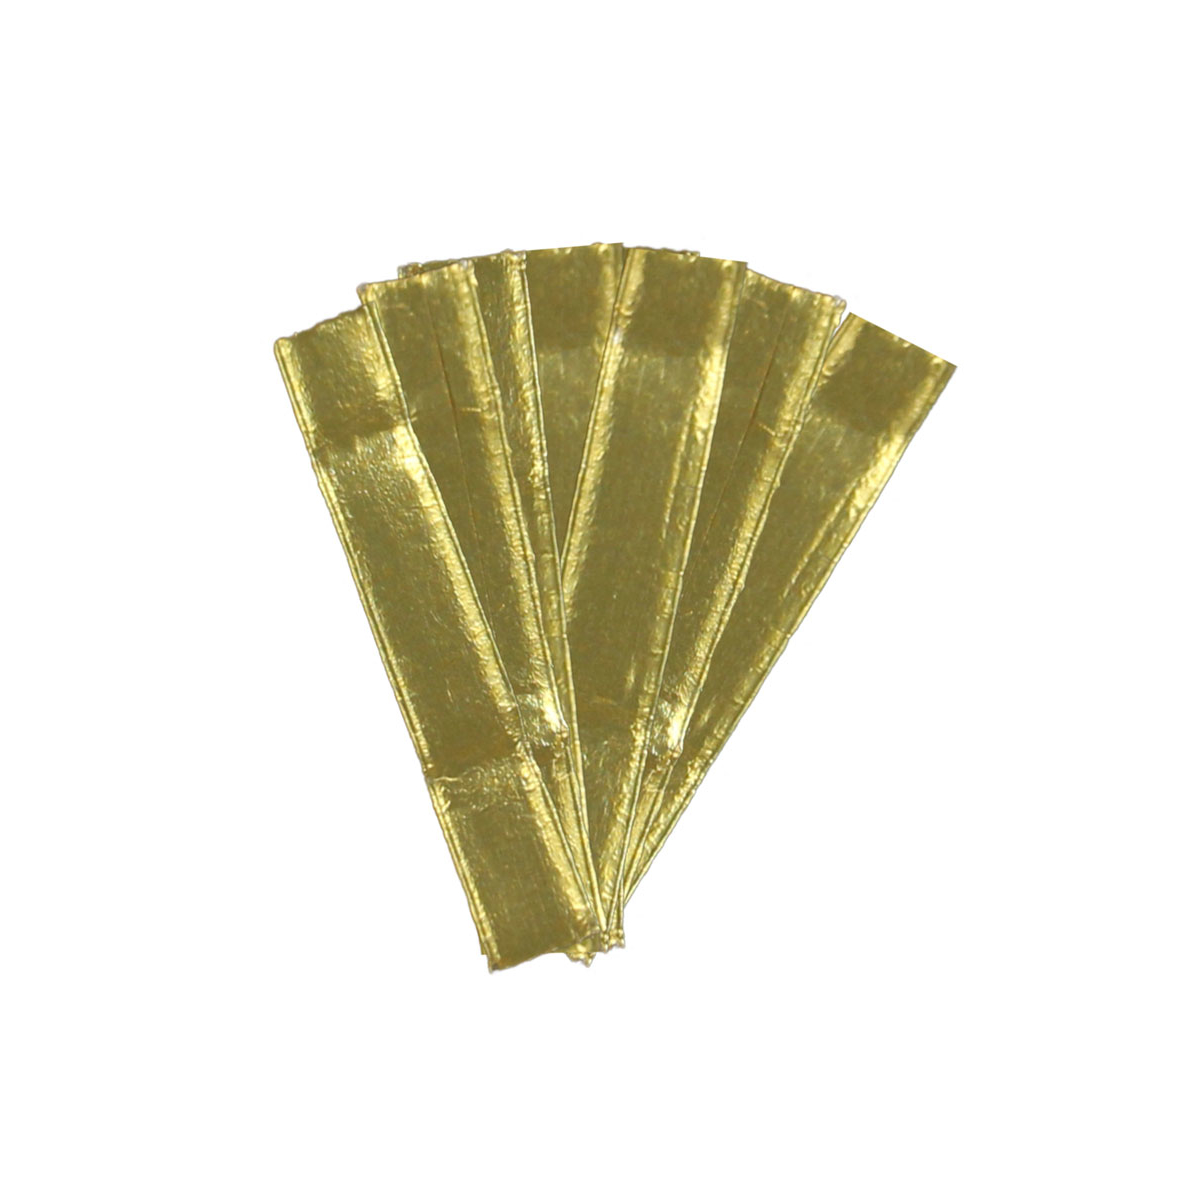 Papier Clips Streifen plano gold
 Rollenware 600 lfm x 8 mm 2-Draht 0,60 mm